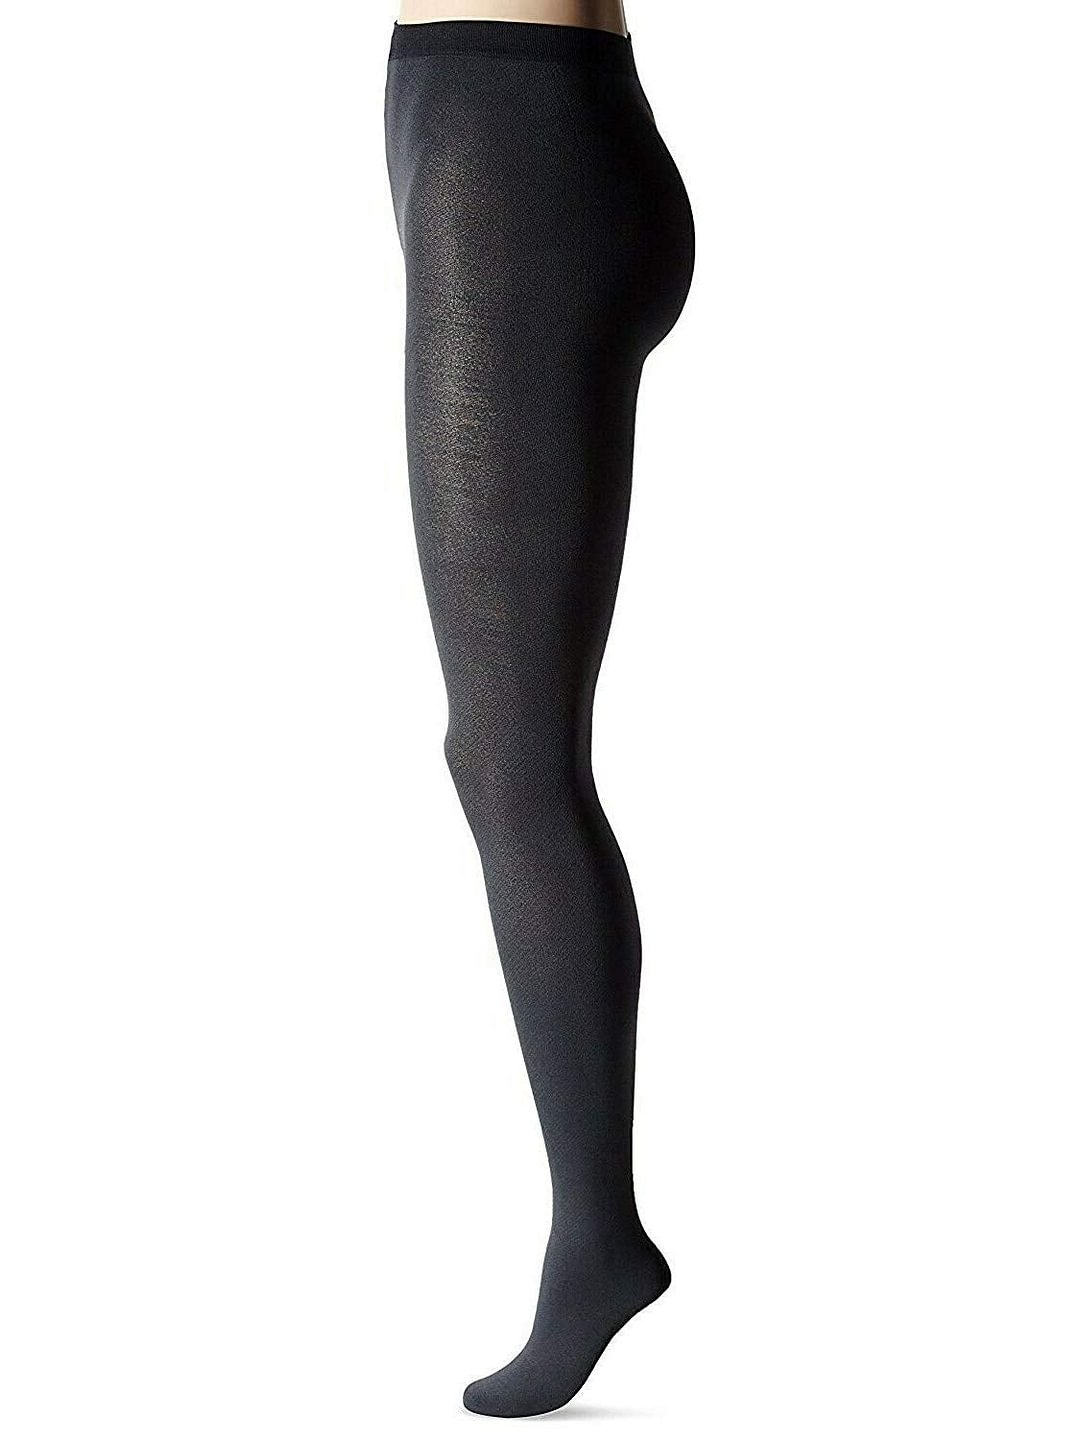 Women's Cozy Tight with Fleece-Lined Leg